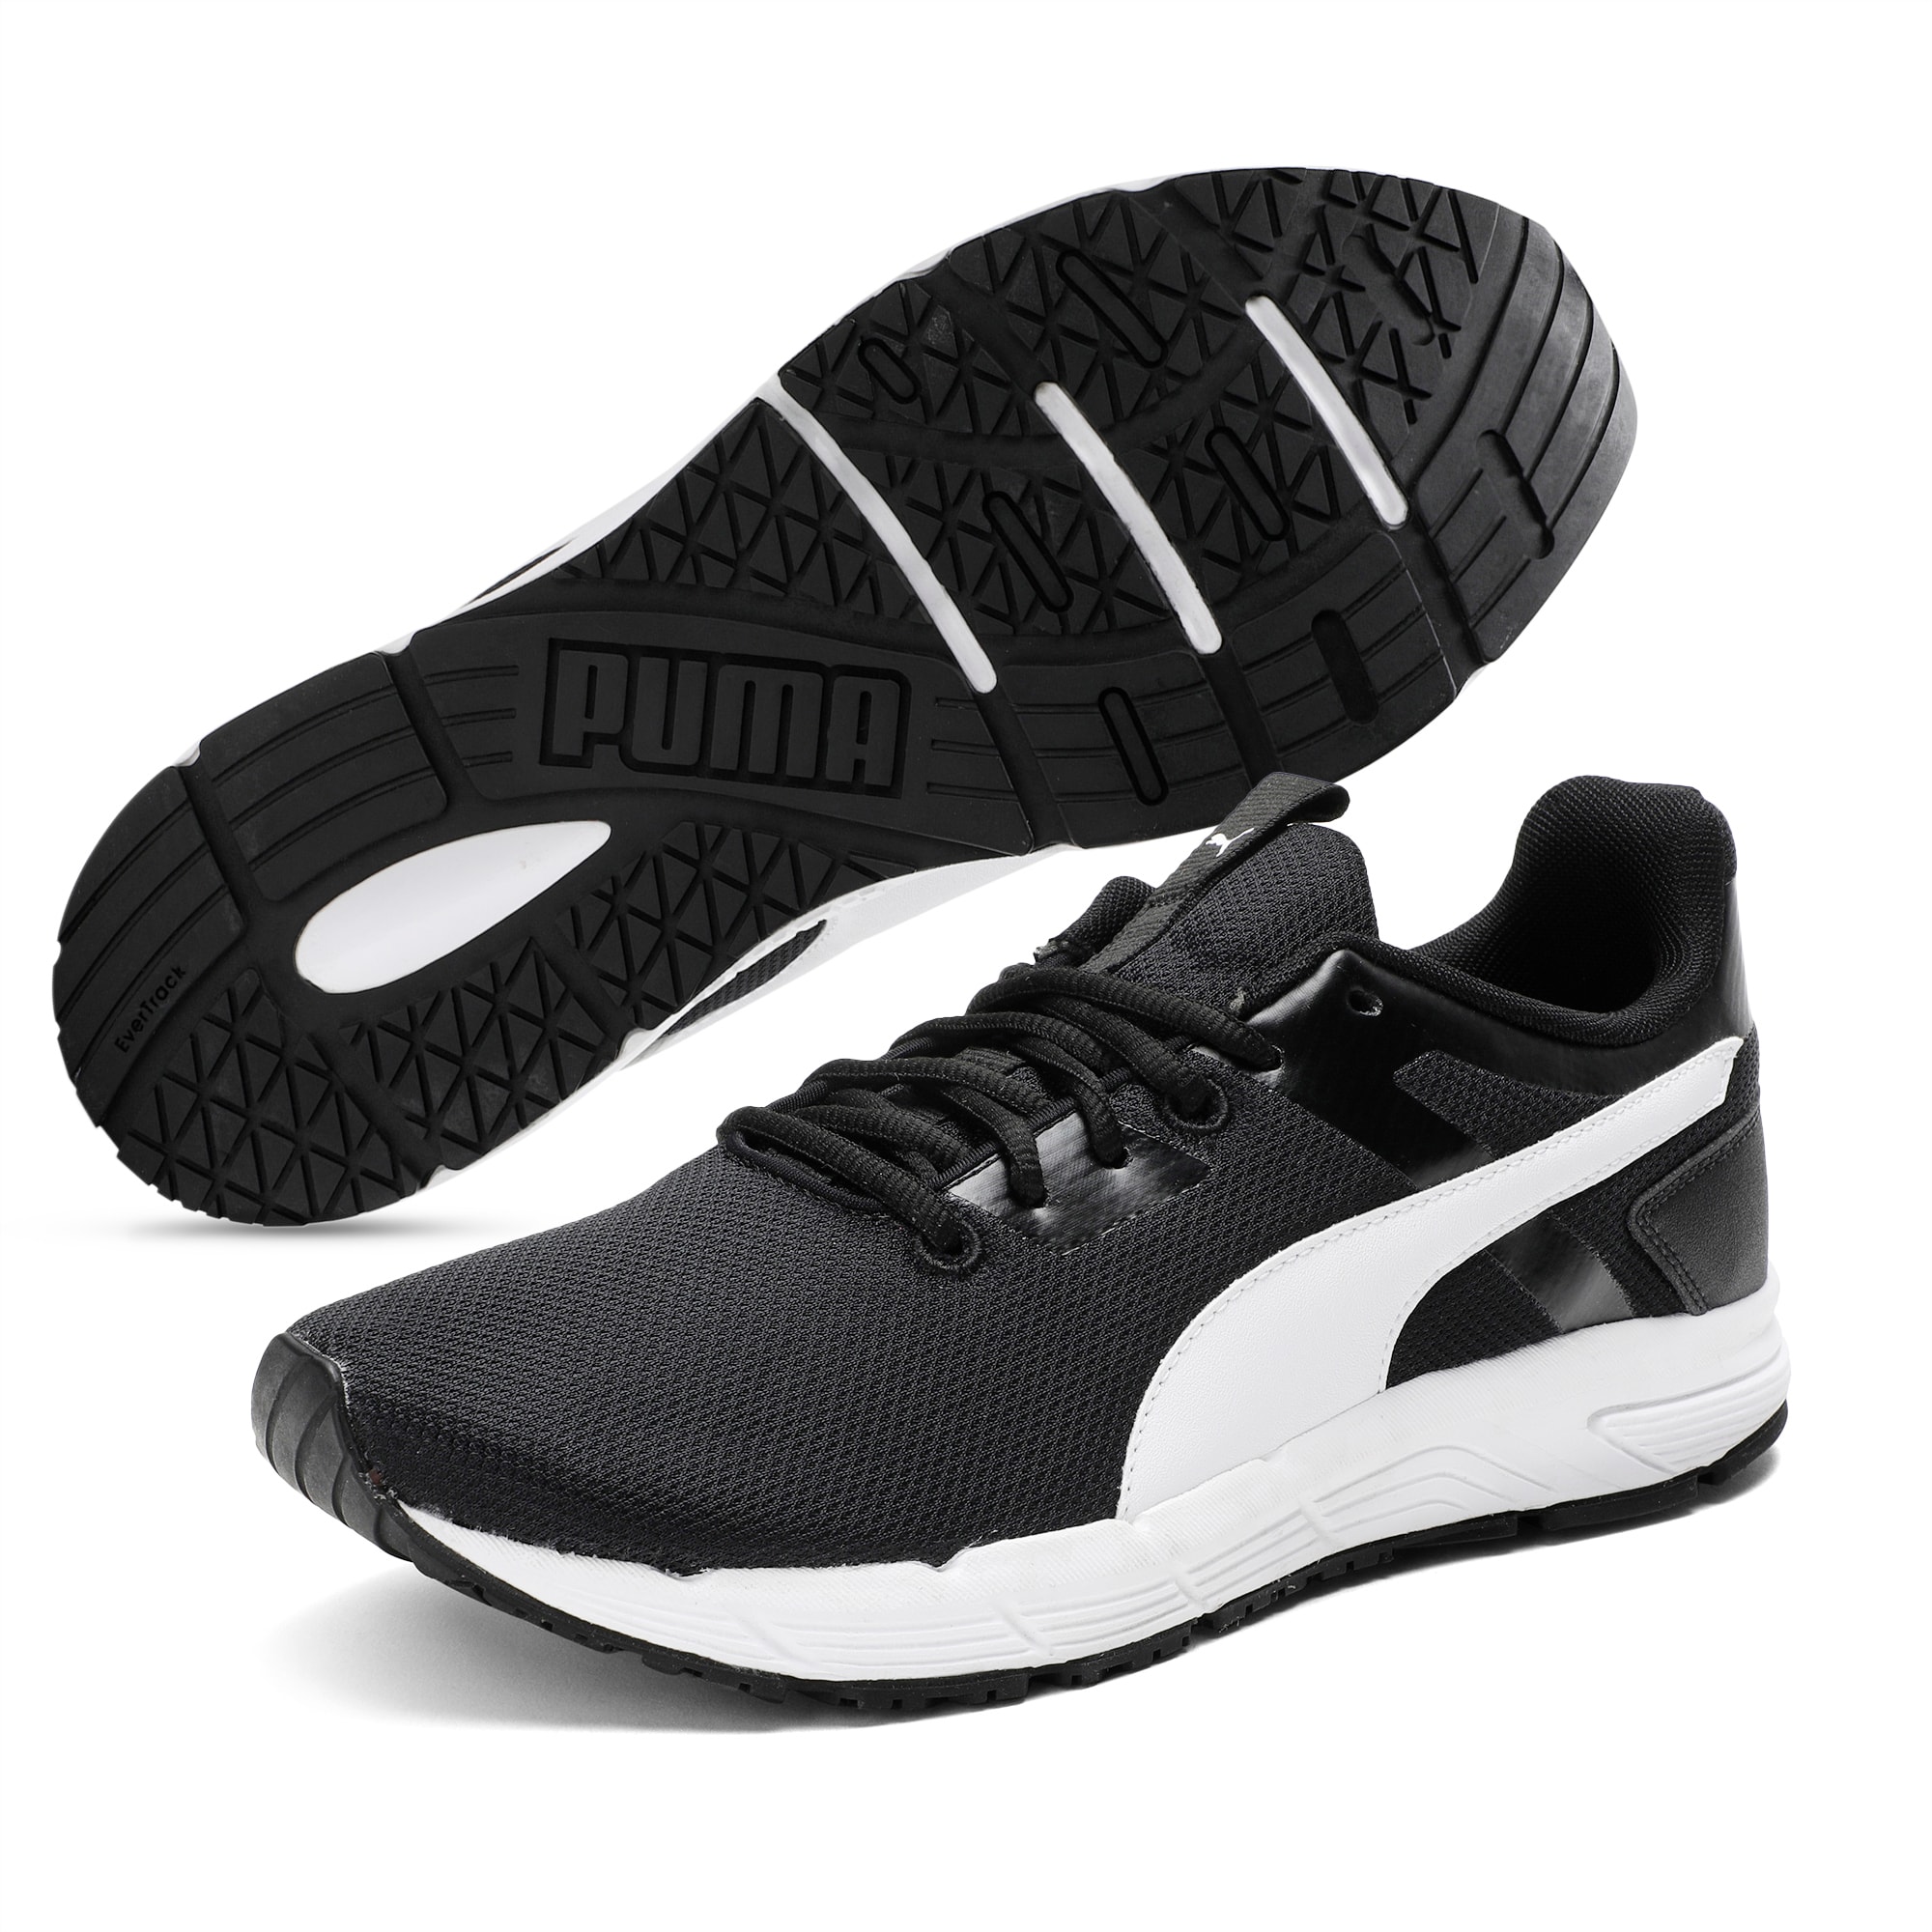 puma progression idp running shoes